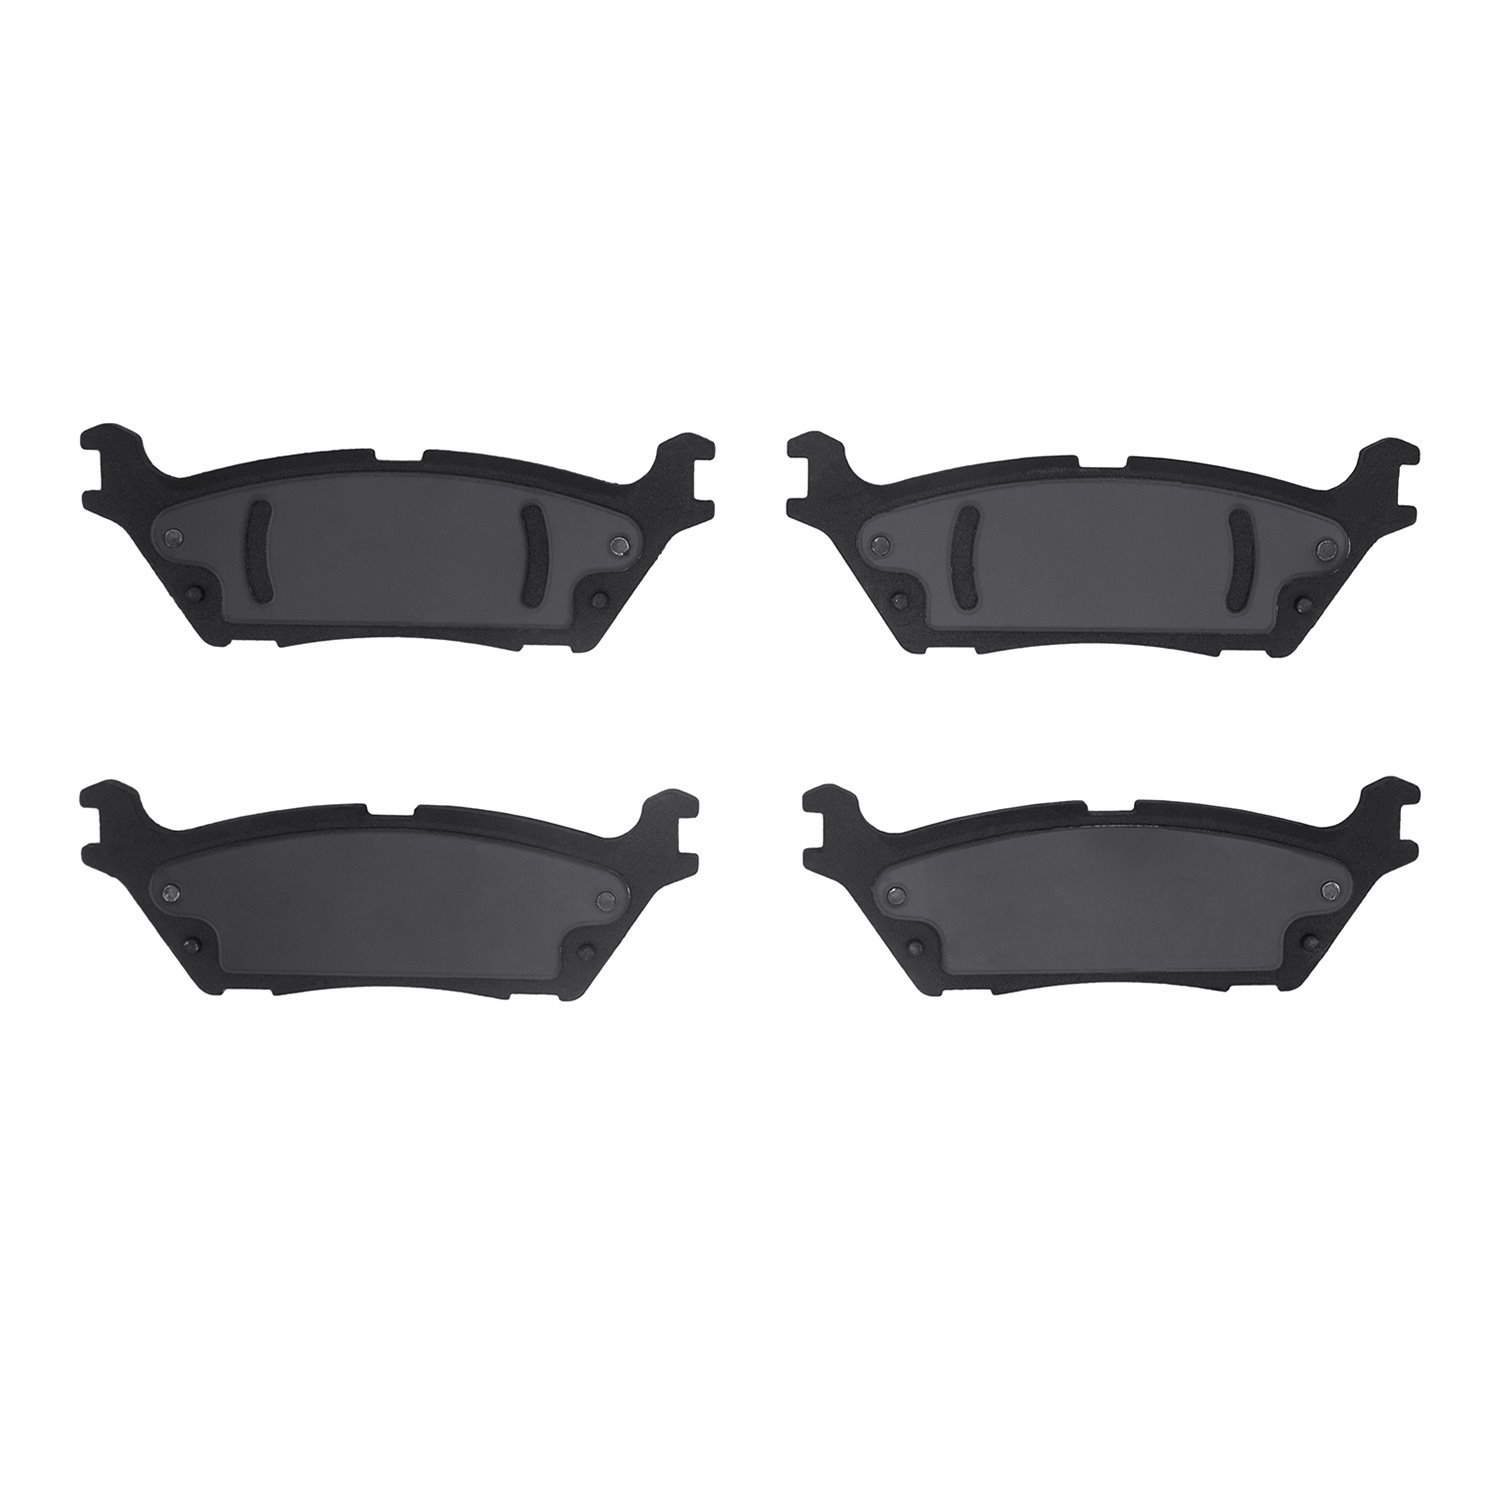 1552-2383-00 5000 Advanced Semi-Metallic Brake Pads, Fits Select Ford/Lincoln/Mercury/Mazda, Position: Rear